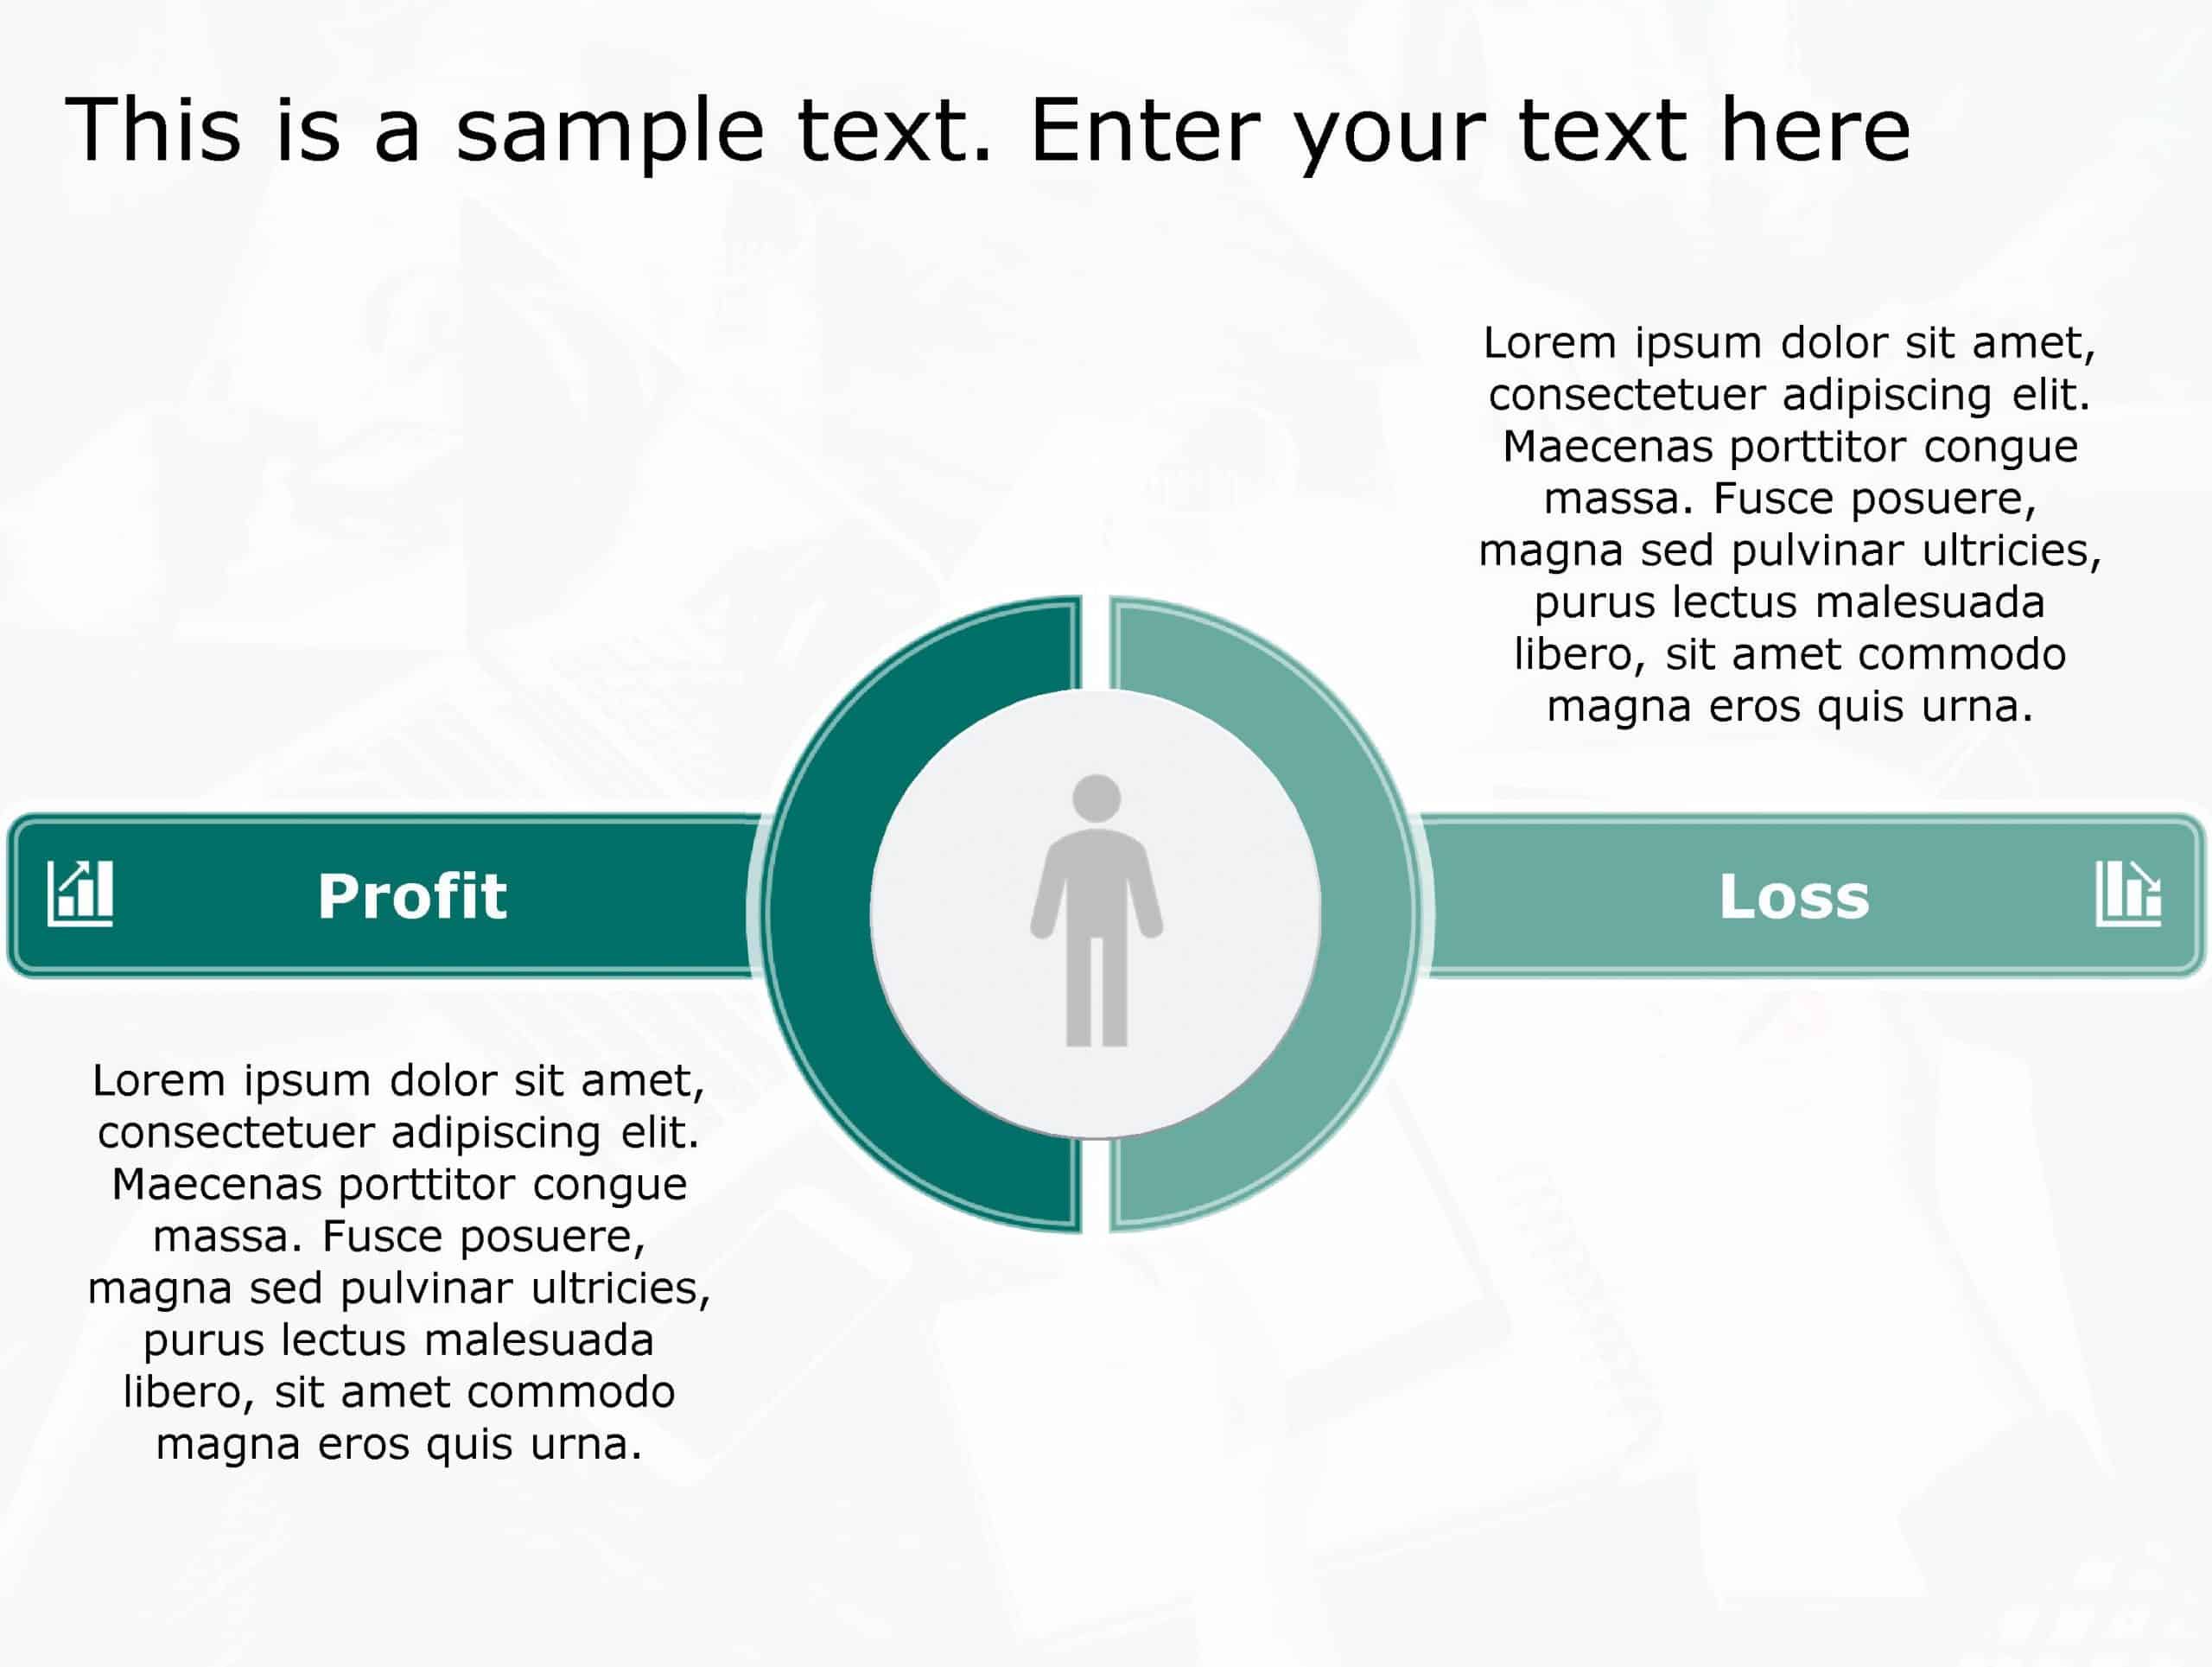 Profit Loss 145 PowerPoint Template & Google Slides Theme